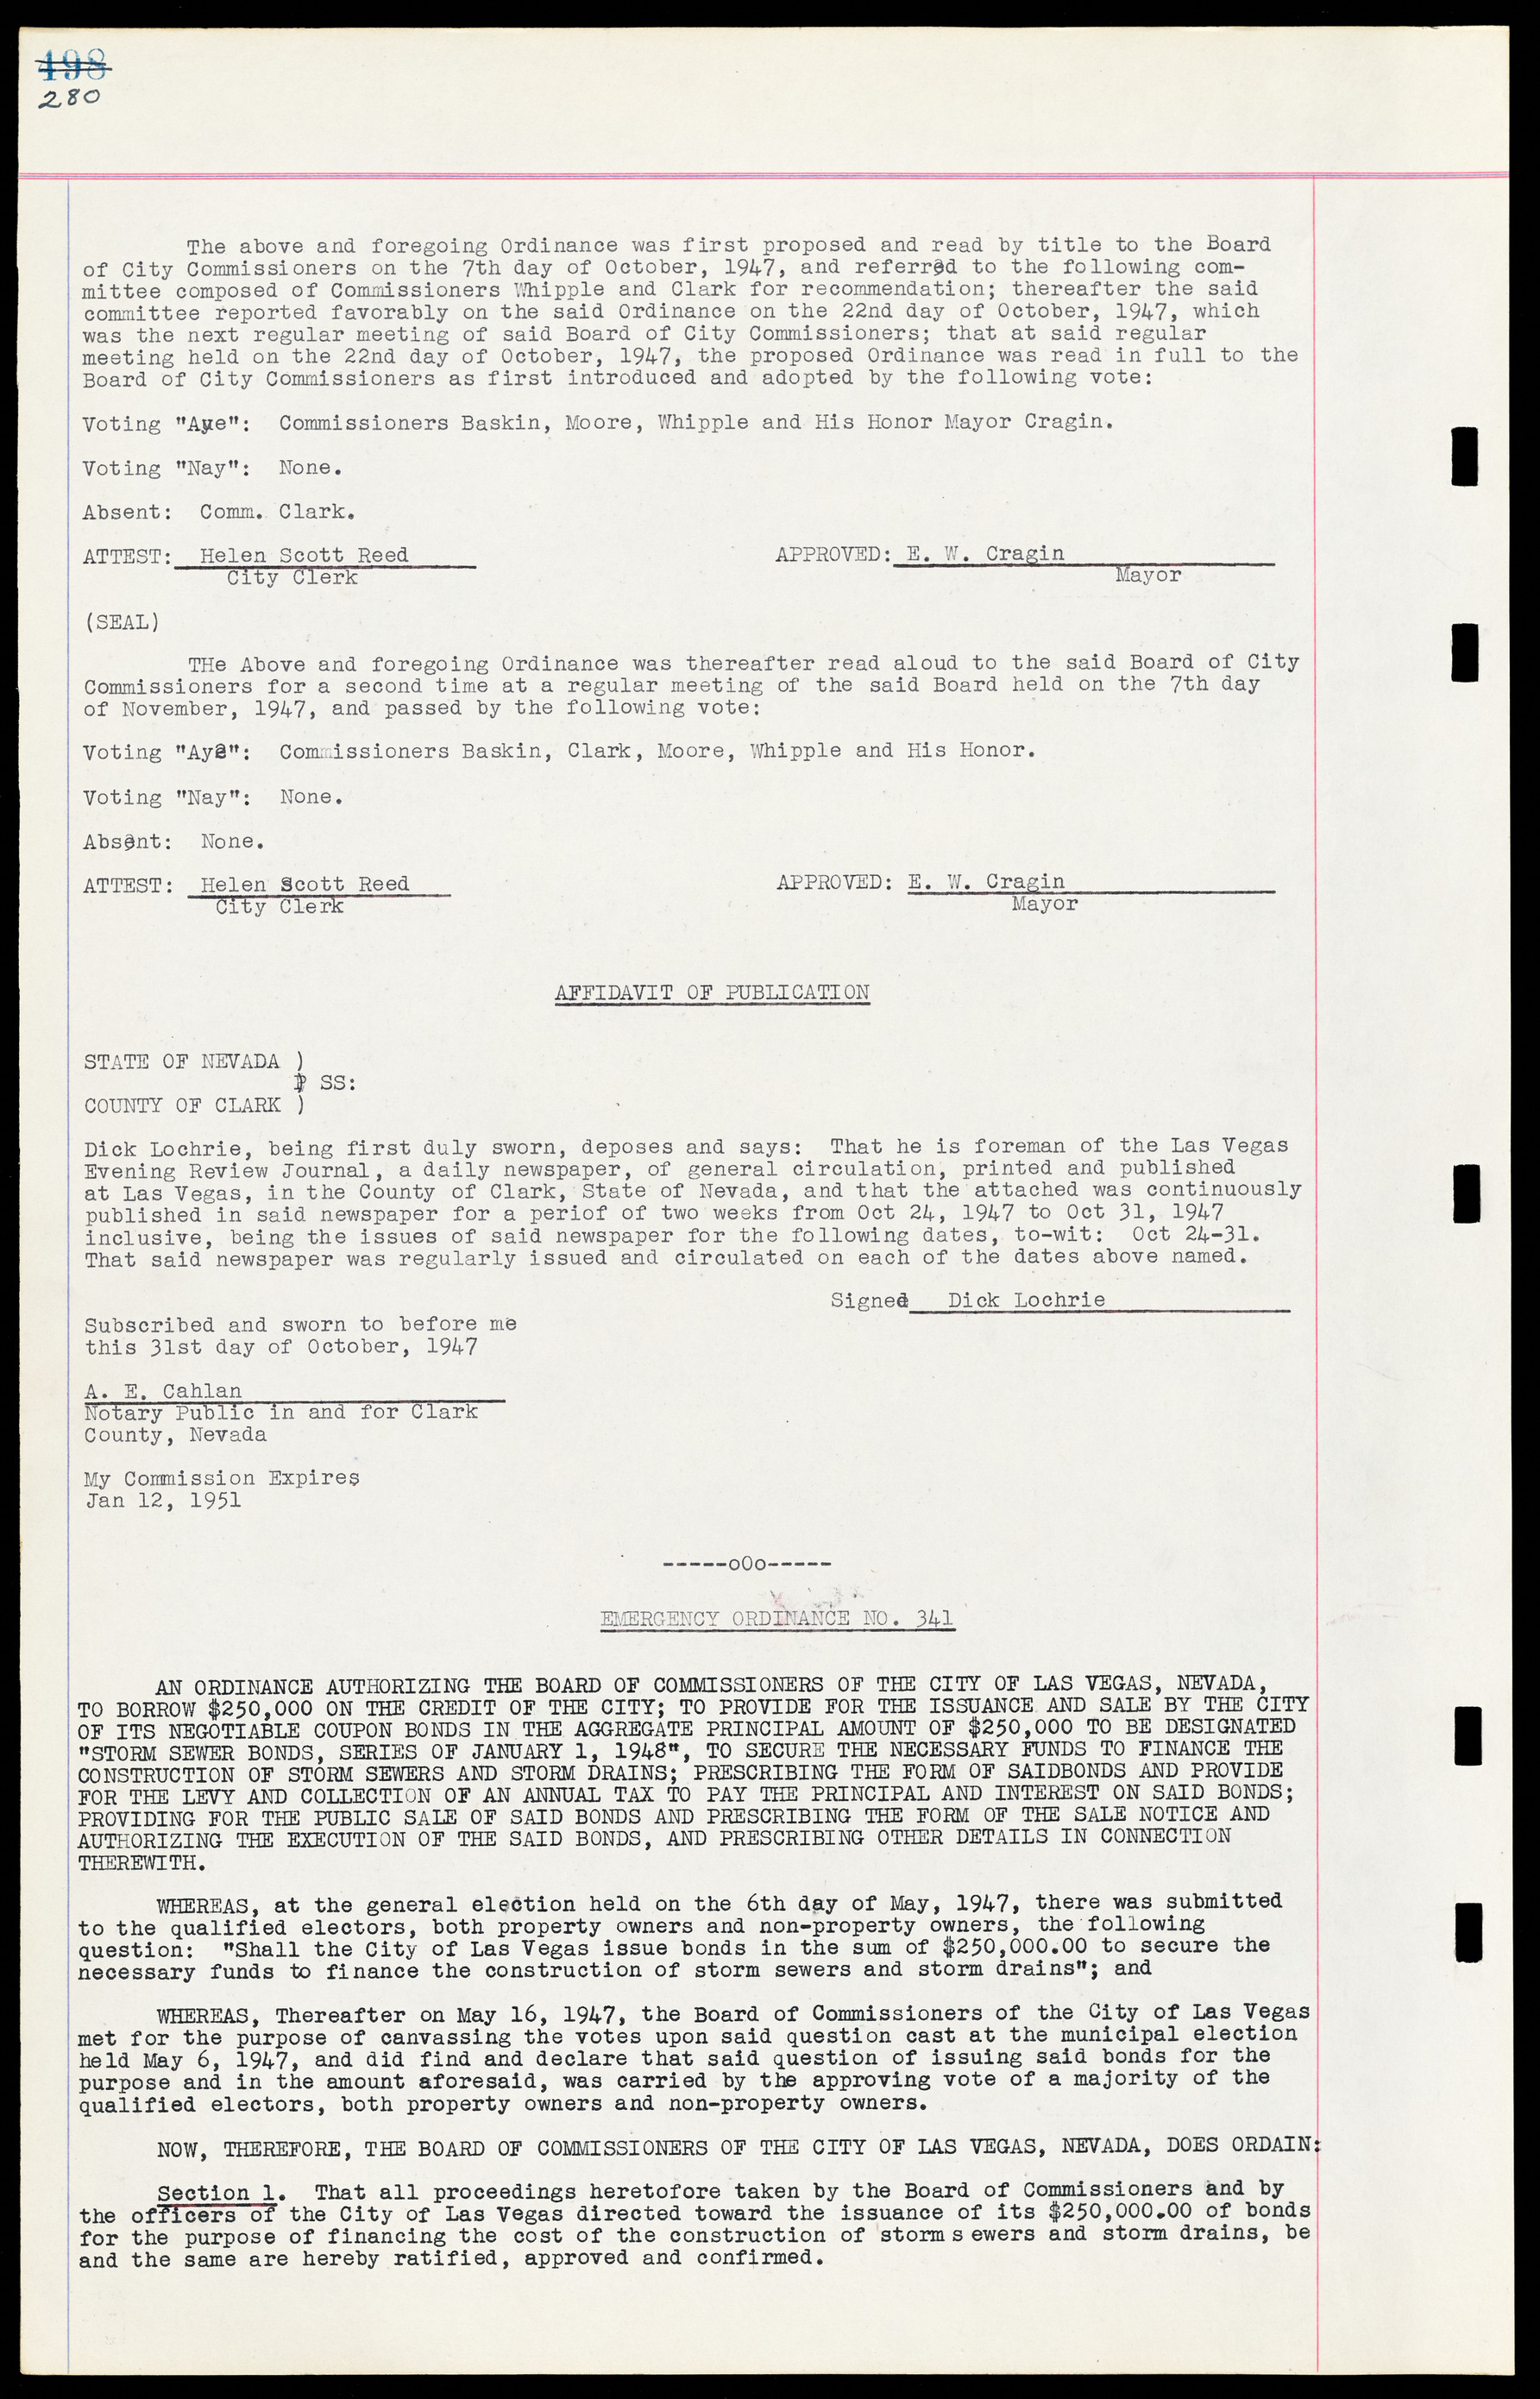 Las Vegas City Ordinances, March 31, 1933 to October 25, 1950, lvc000014-309